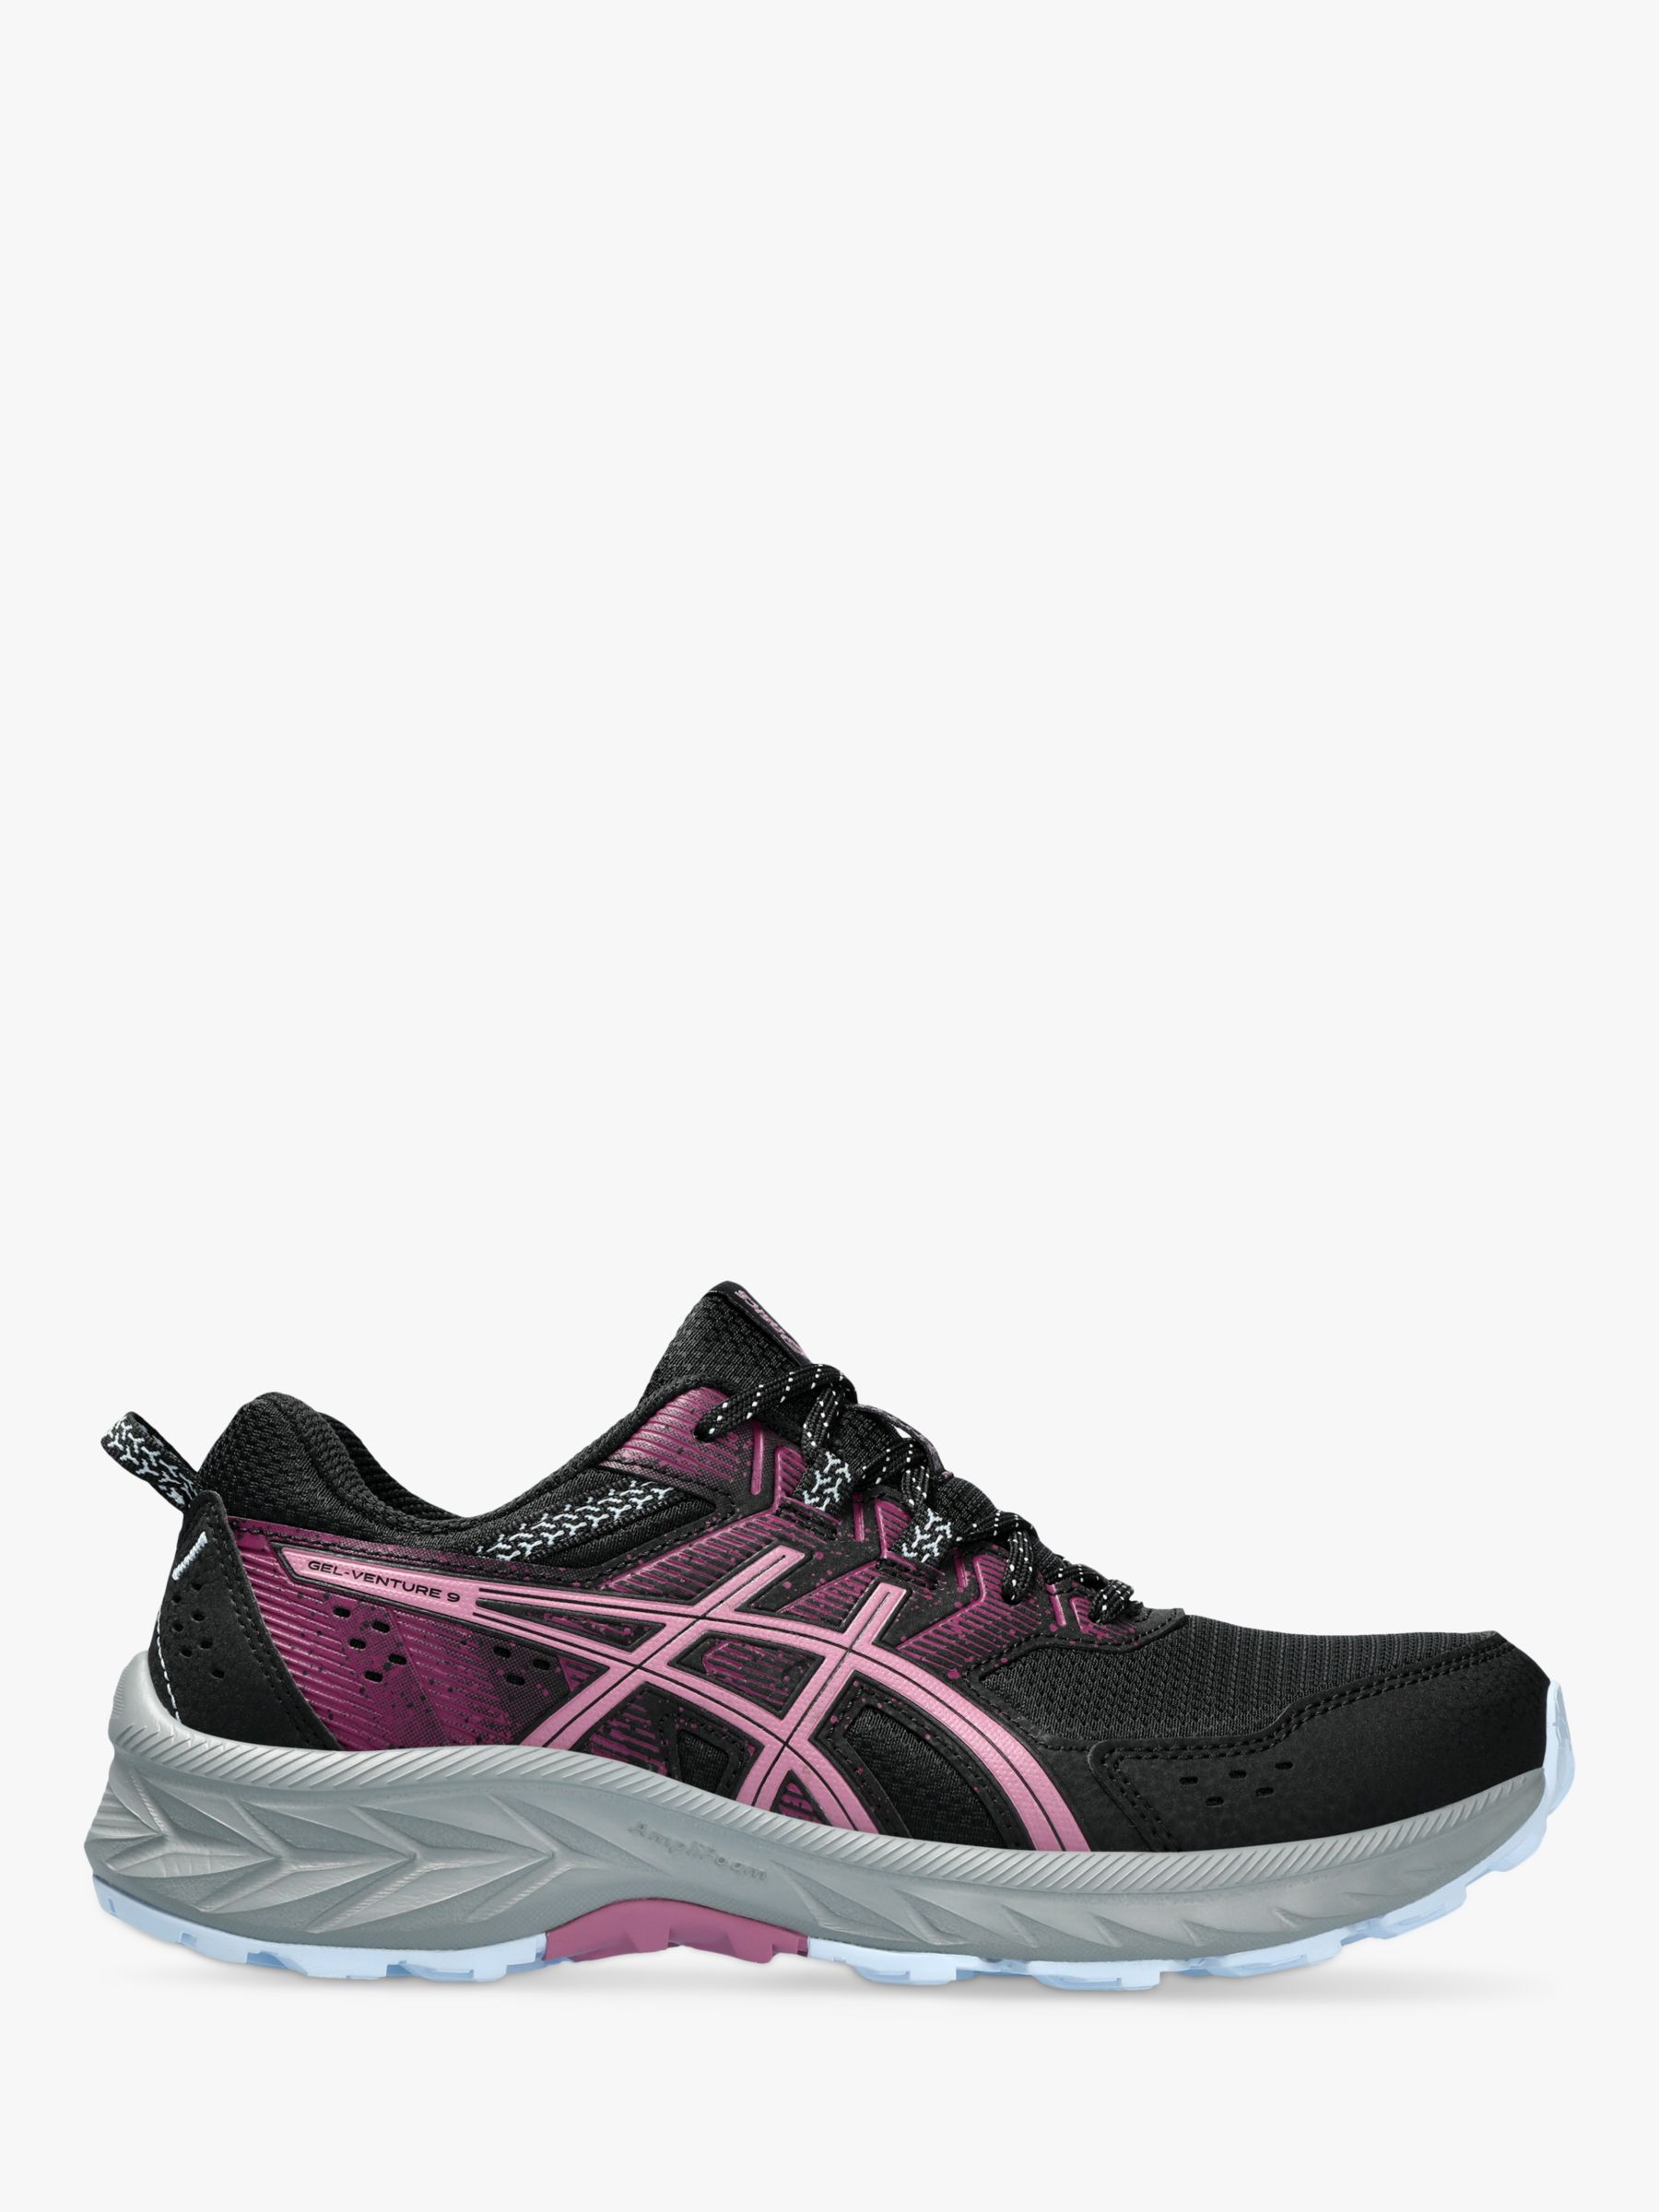 ASICS GEL-VENTURE 9 Women's Trail Running Shoes, Black/Berry, 5.5